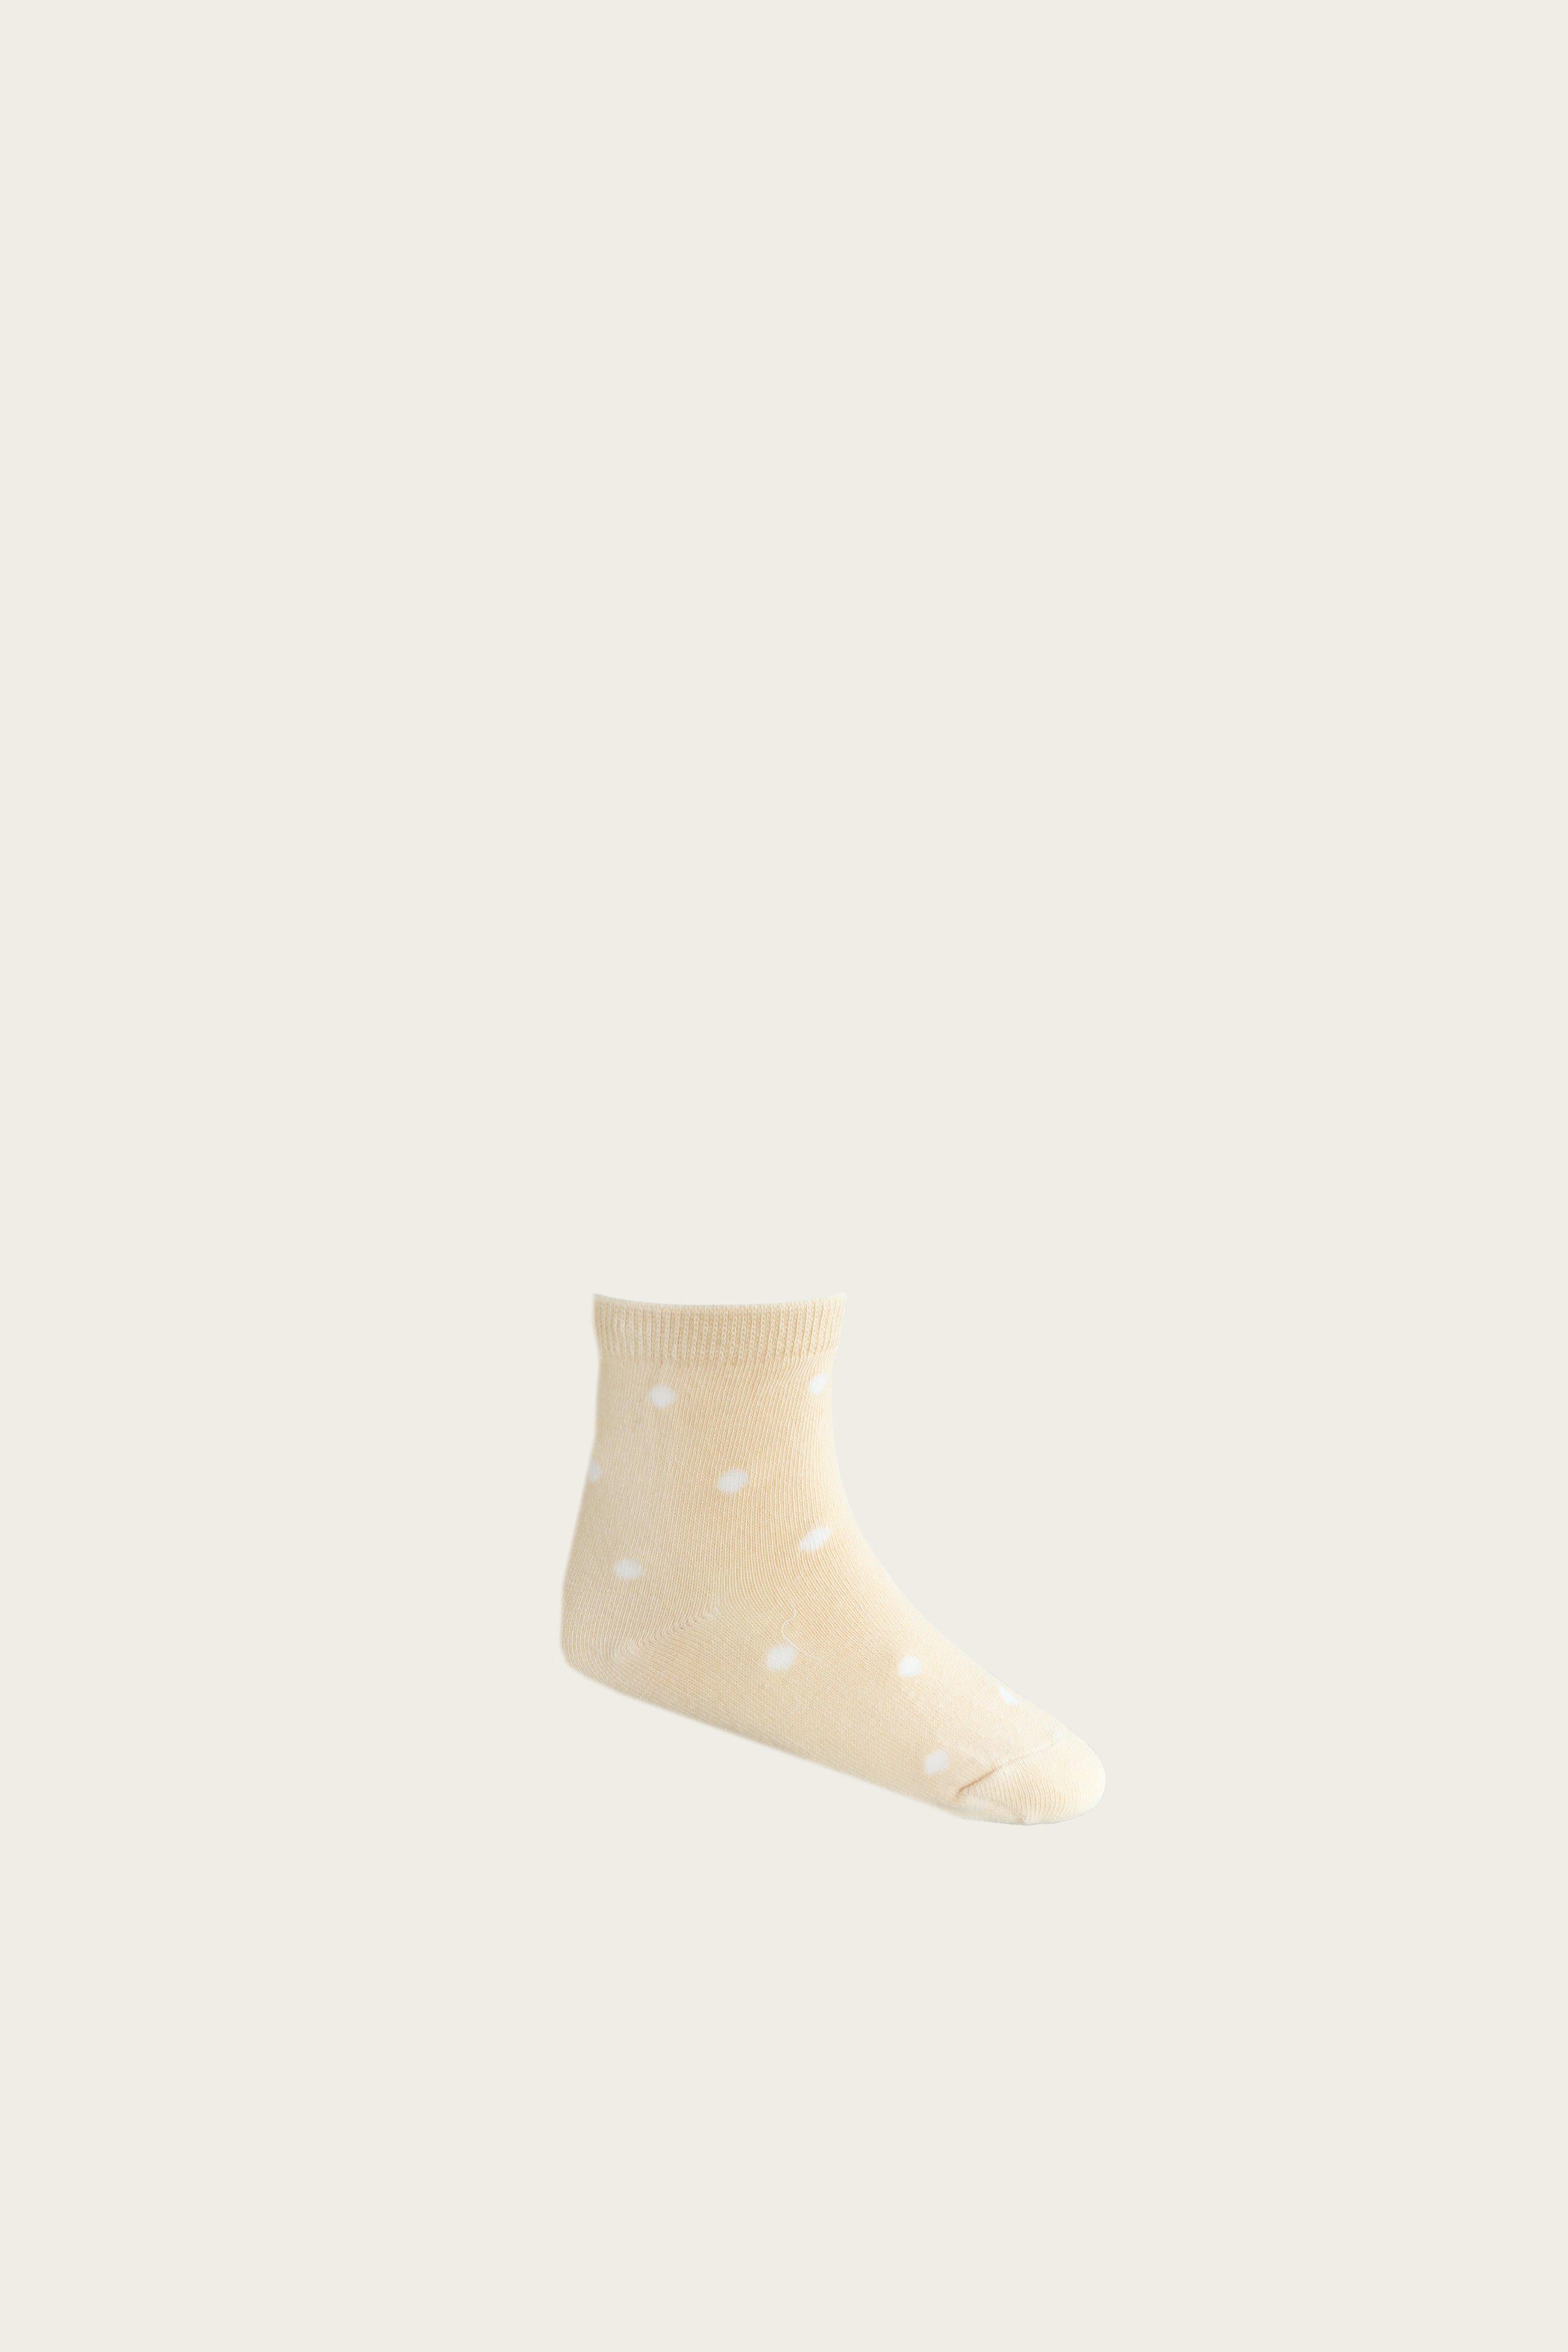 Dotty Socks - Autumn-Shoes & Socks-Jamie Kay-The Bay Room